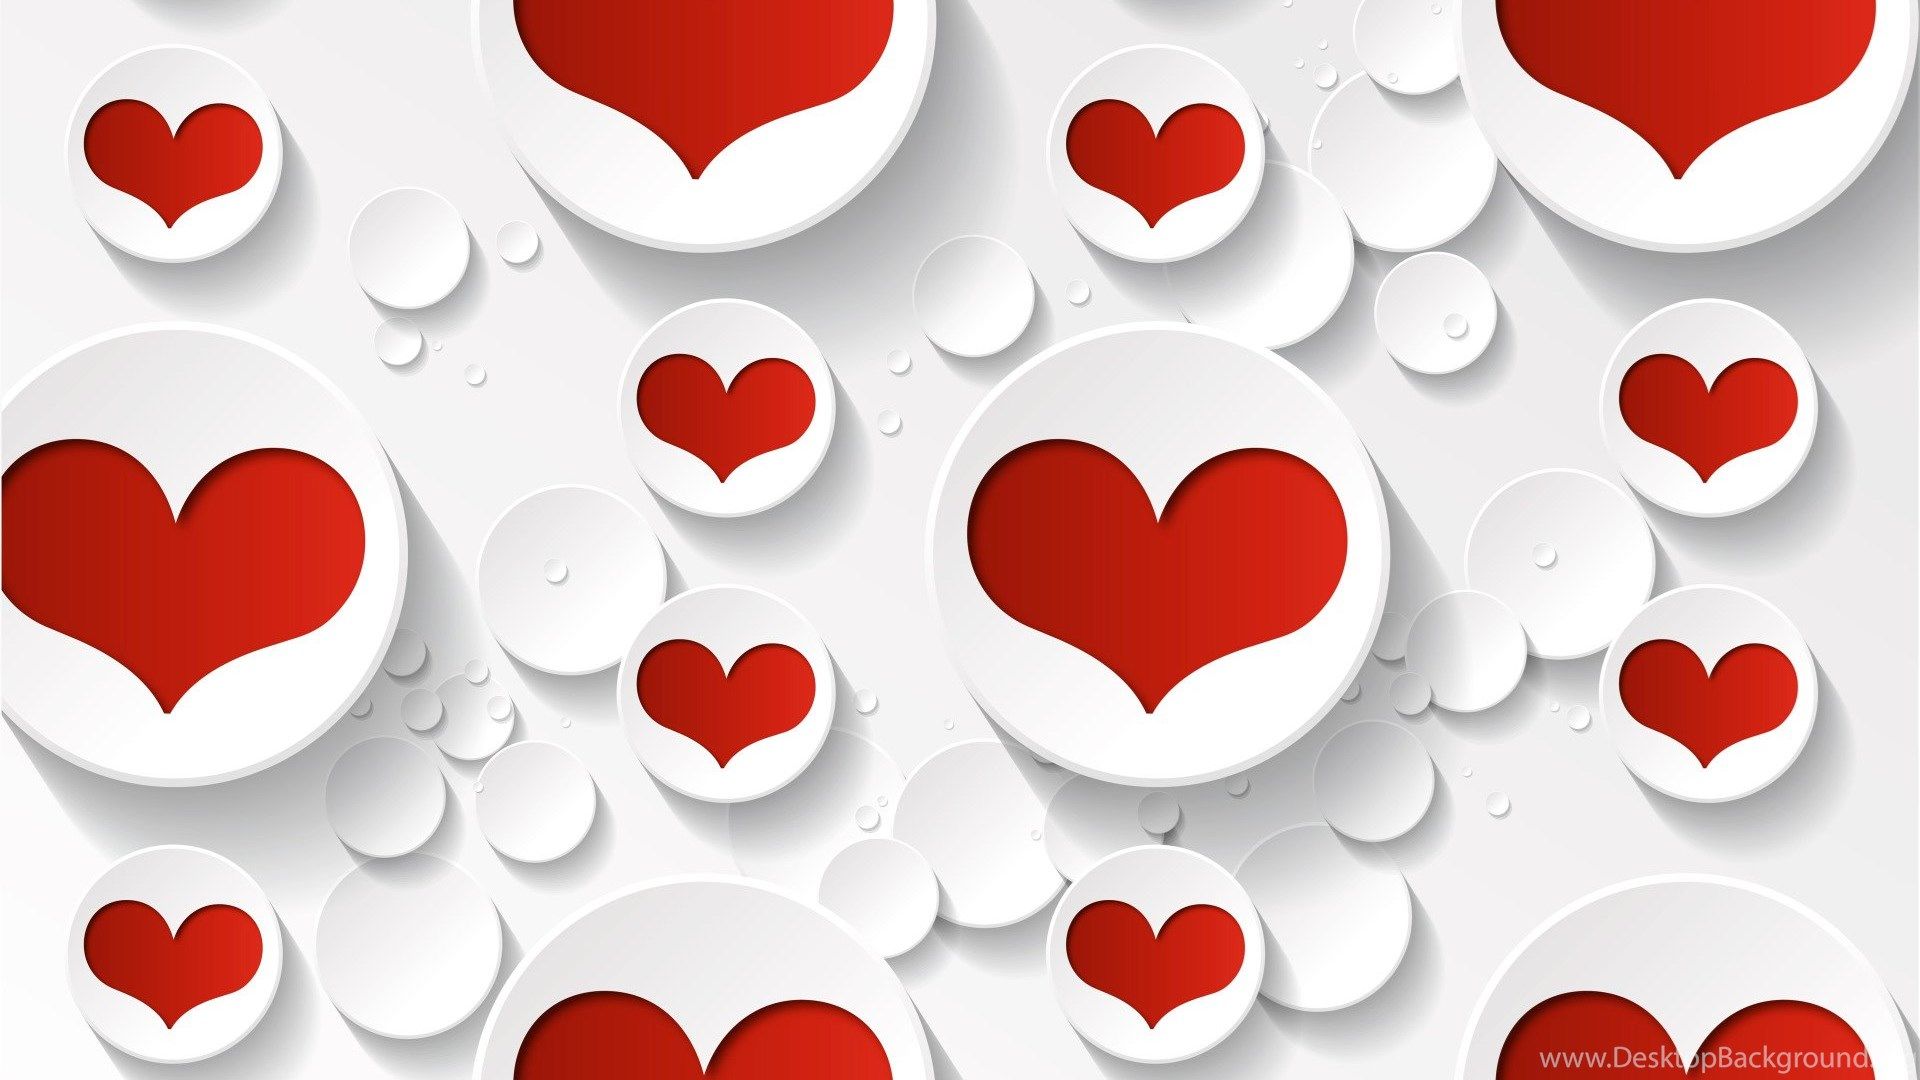 Valentine's Day Red And White Hearts .desktopbackground.org